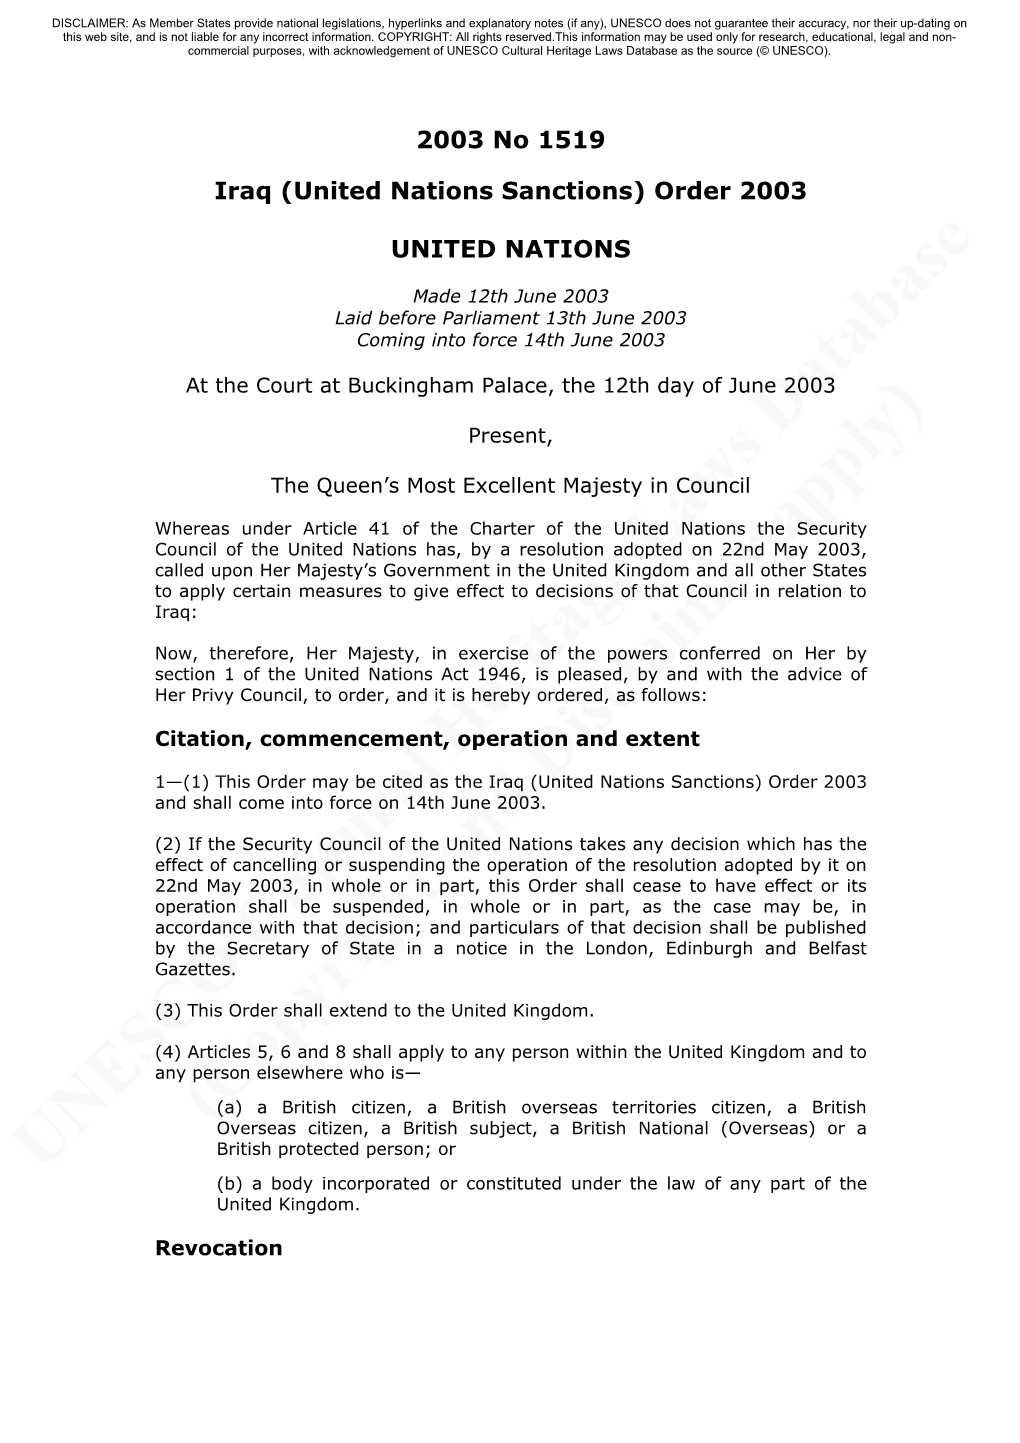 Iraq (United Nations Sanctions) Order 2003